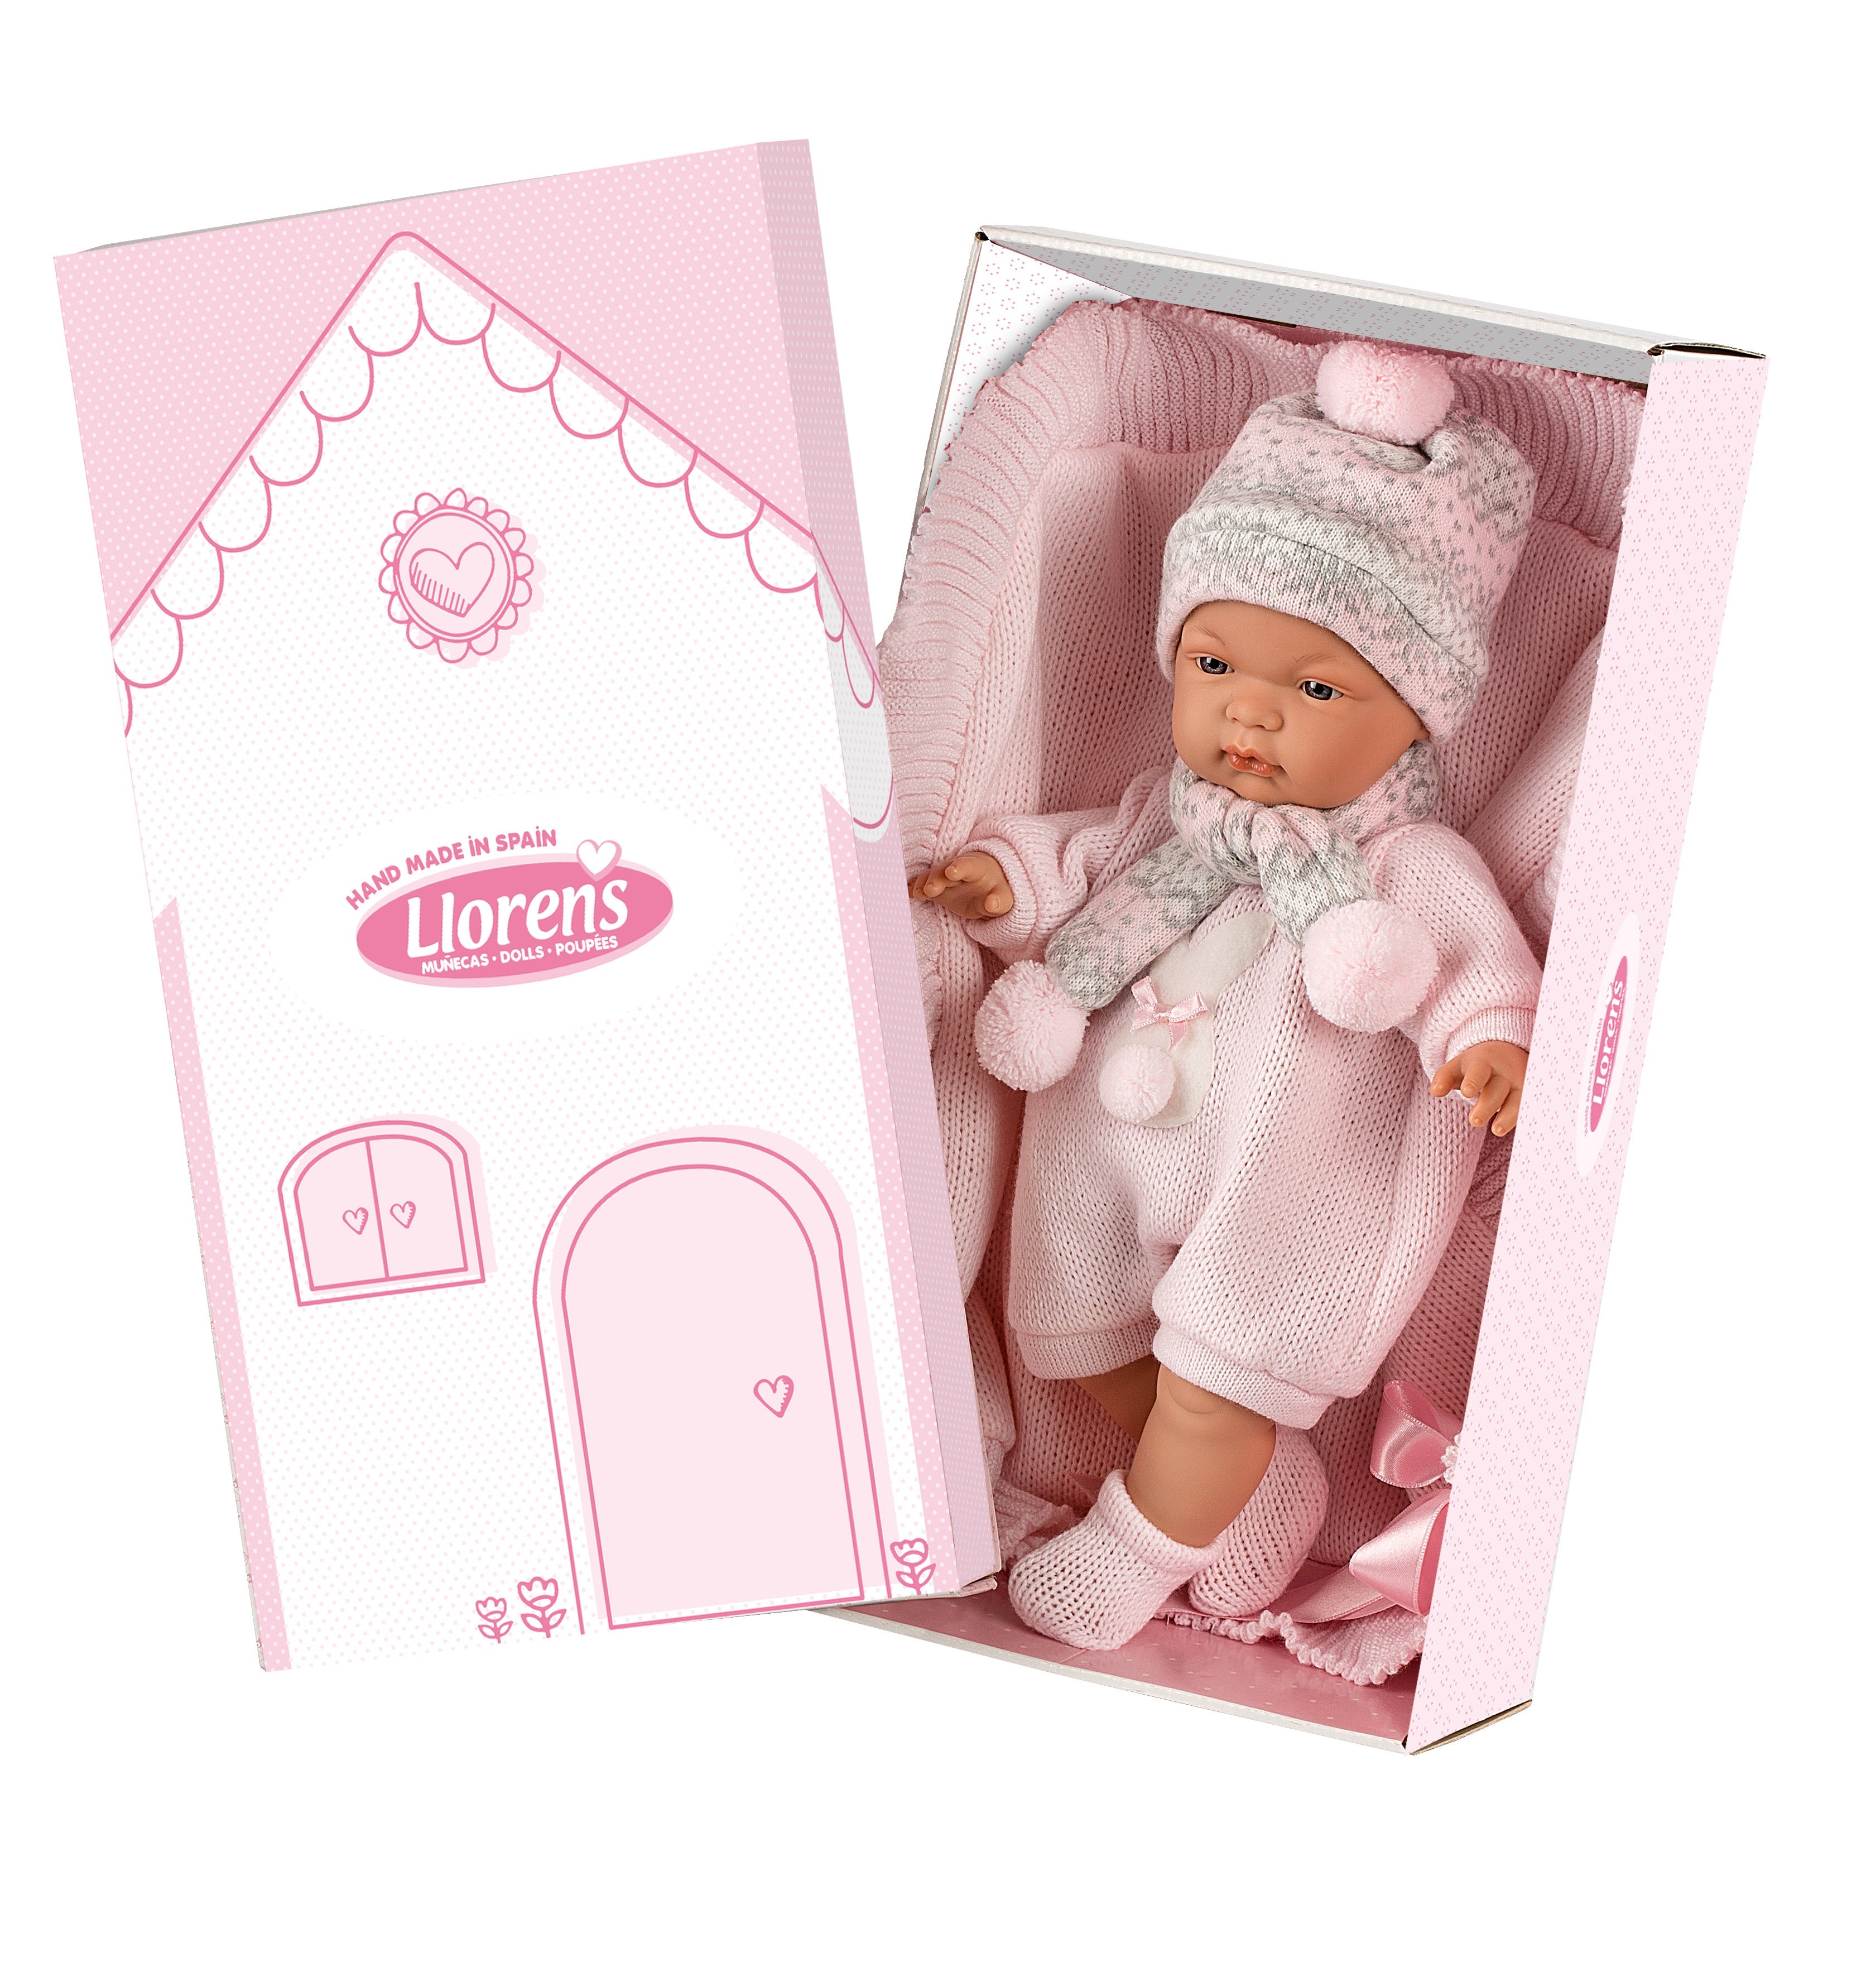 Llorens 15" Soft Body Crying Baby Doll Tatiana with Blanket Dolls